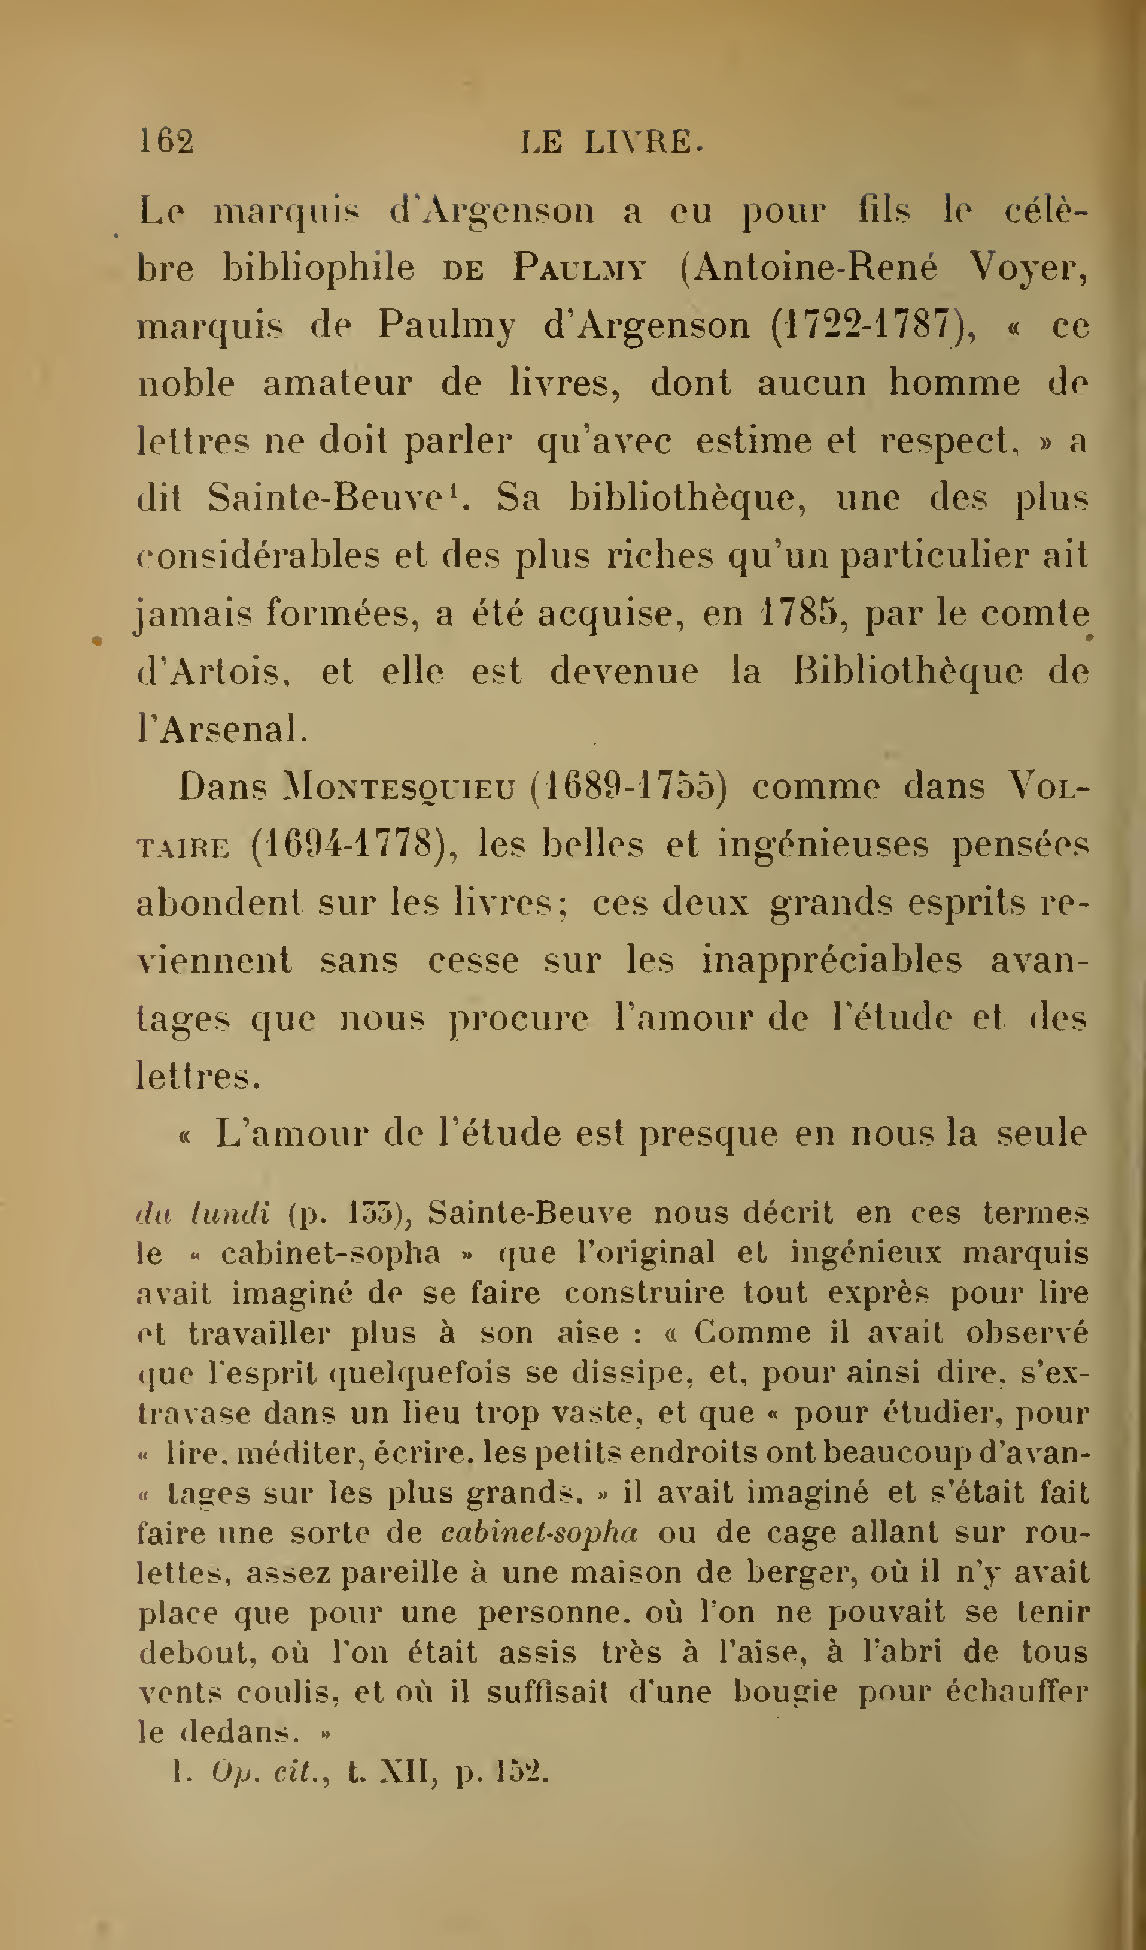 Albert Cim, Le Livre, t. I, p. 162.